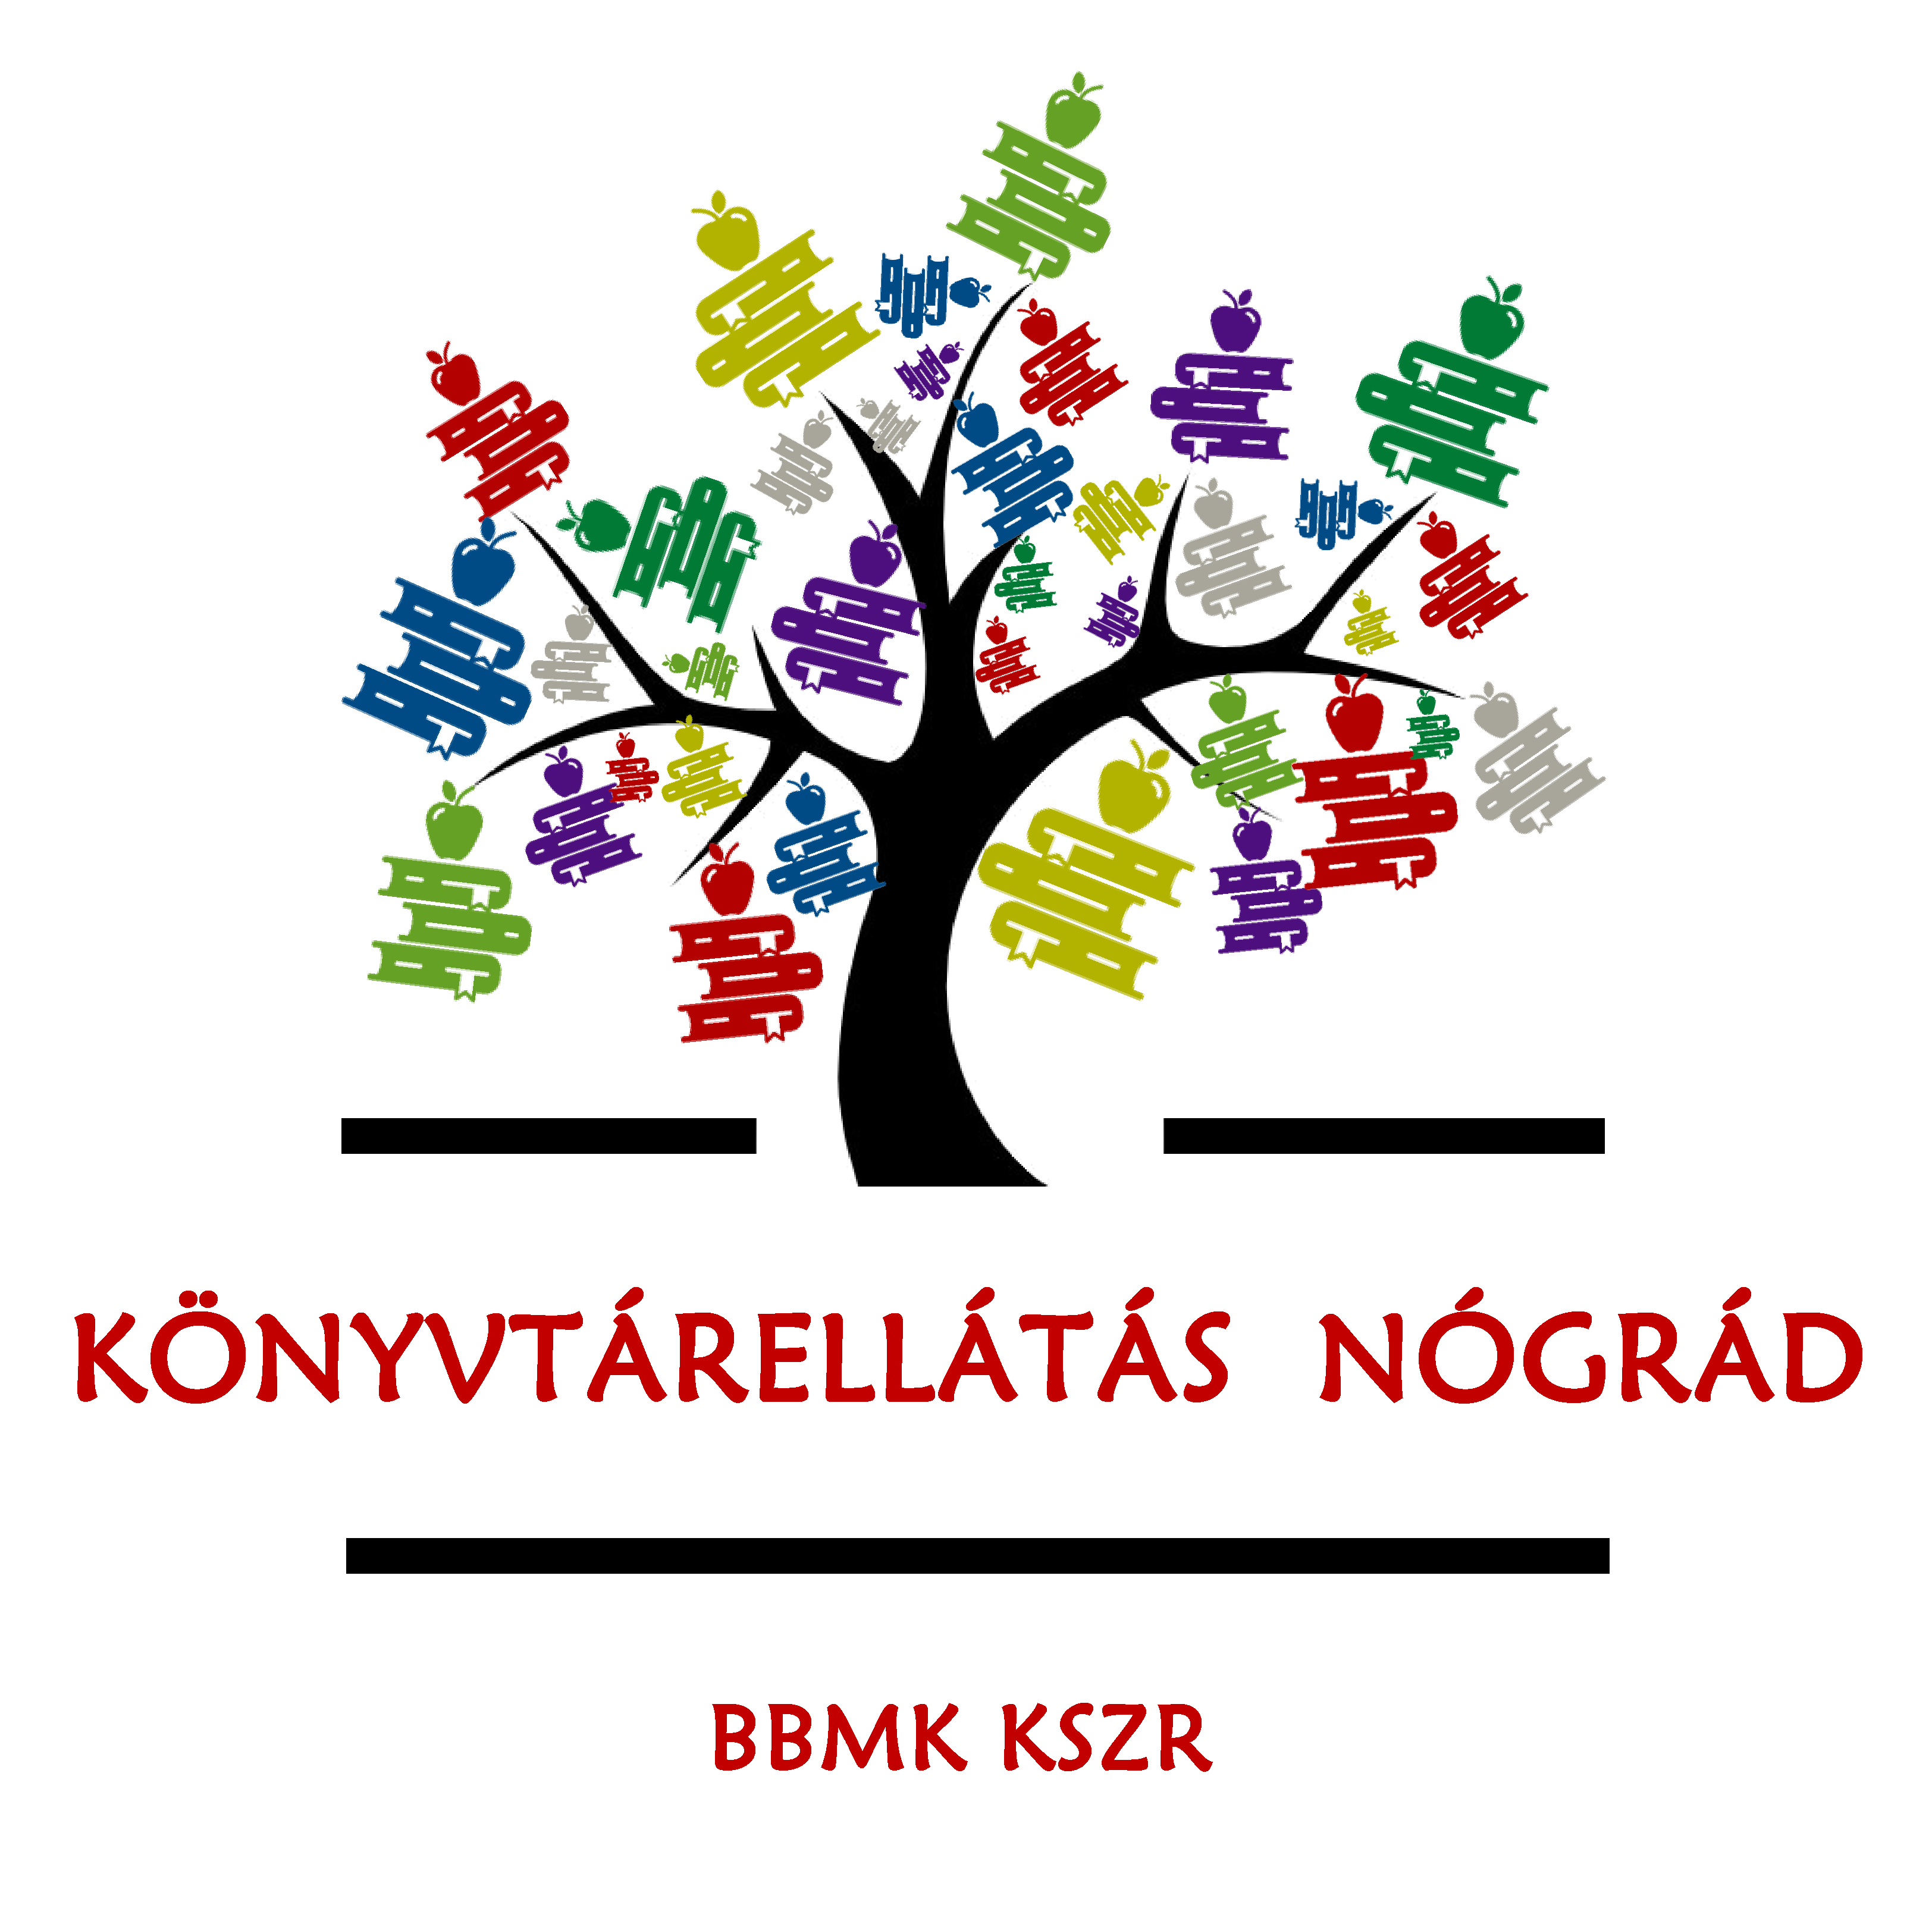 Monguz-logo